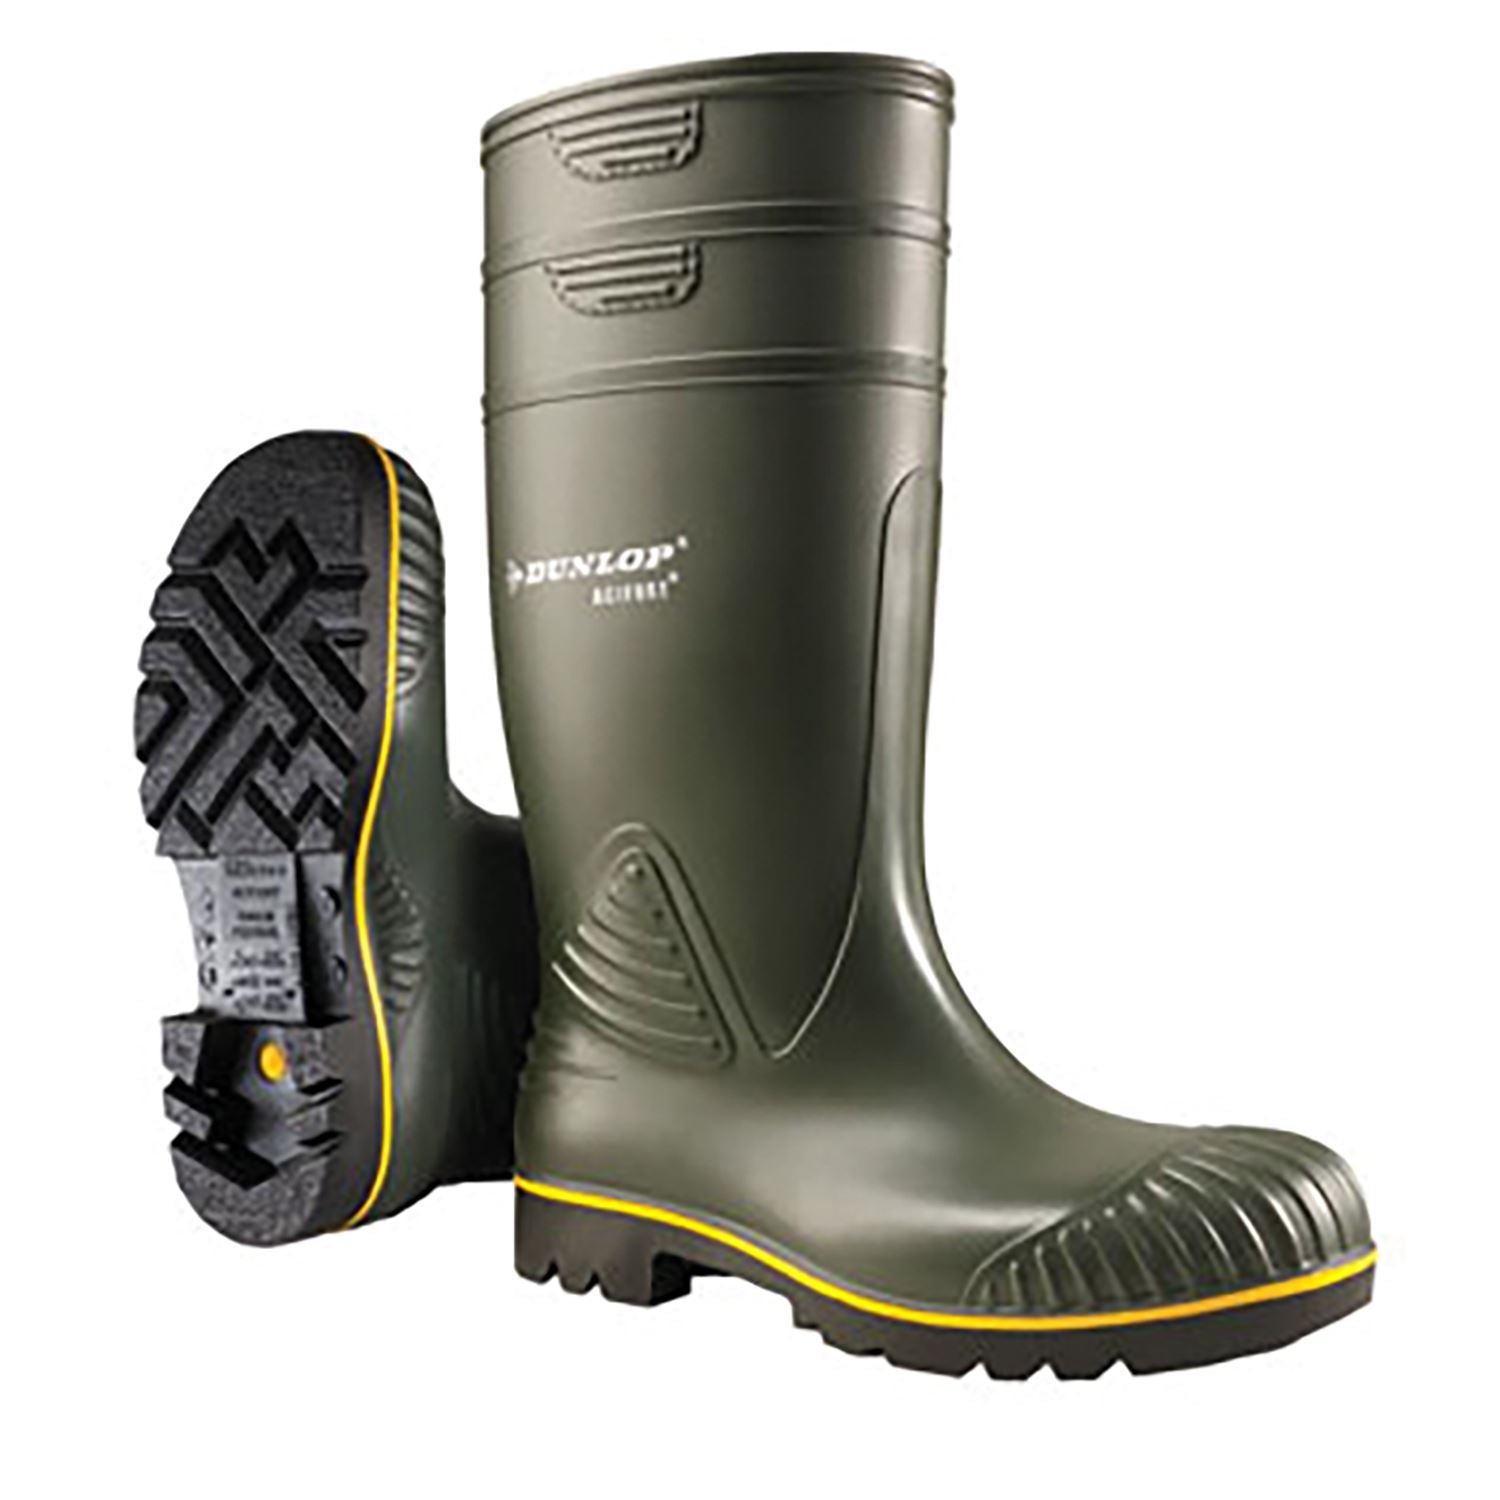 Dunlop Acifort Heavy Duty Boots - Just Horse Riders